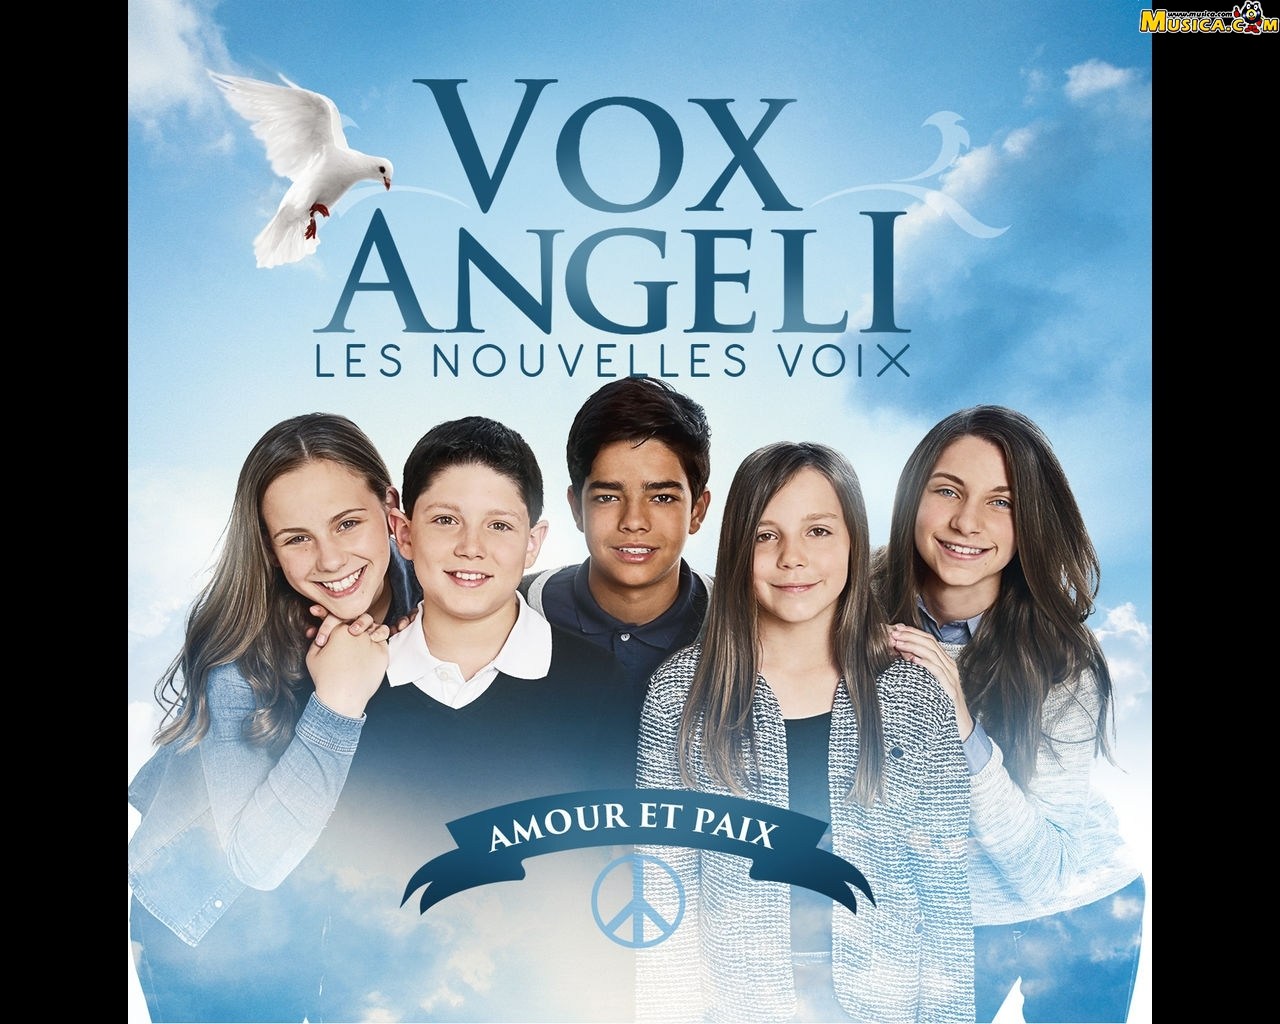 Fondo de pantalla de Vox Angeli